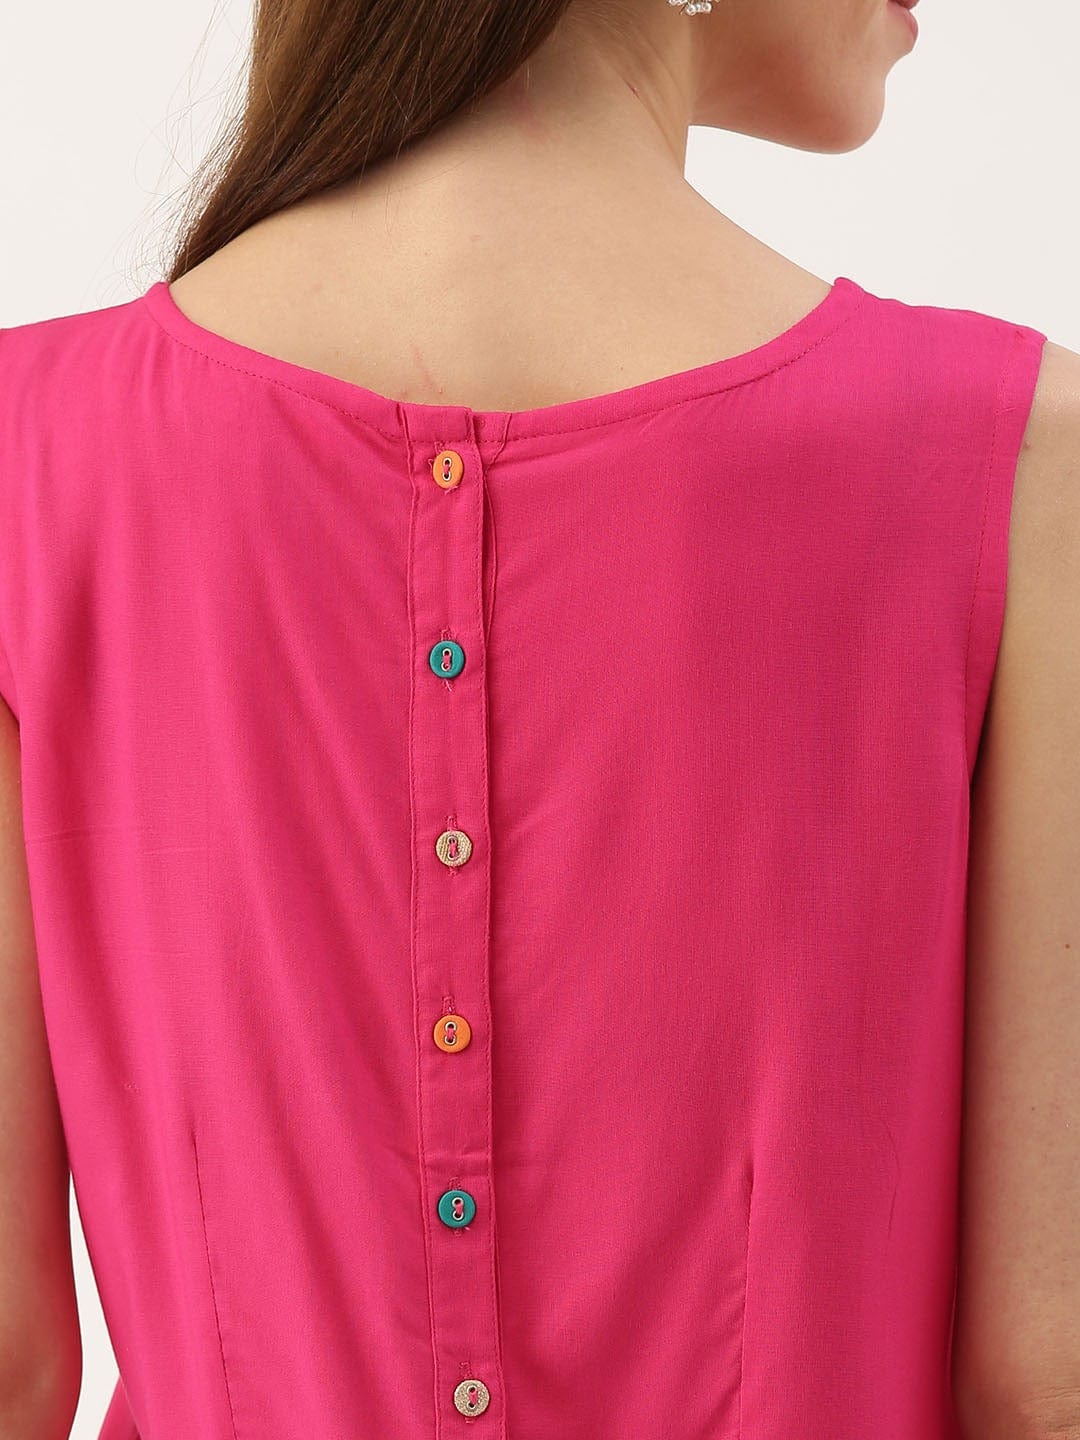 Women's Pink & Golden Embroidered Top with Skirt - Varanga